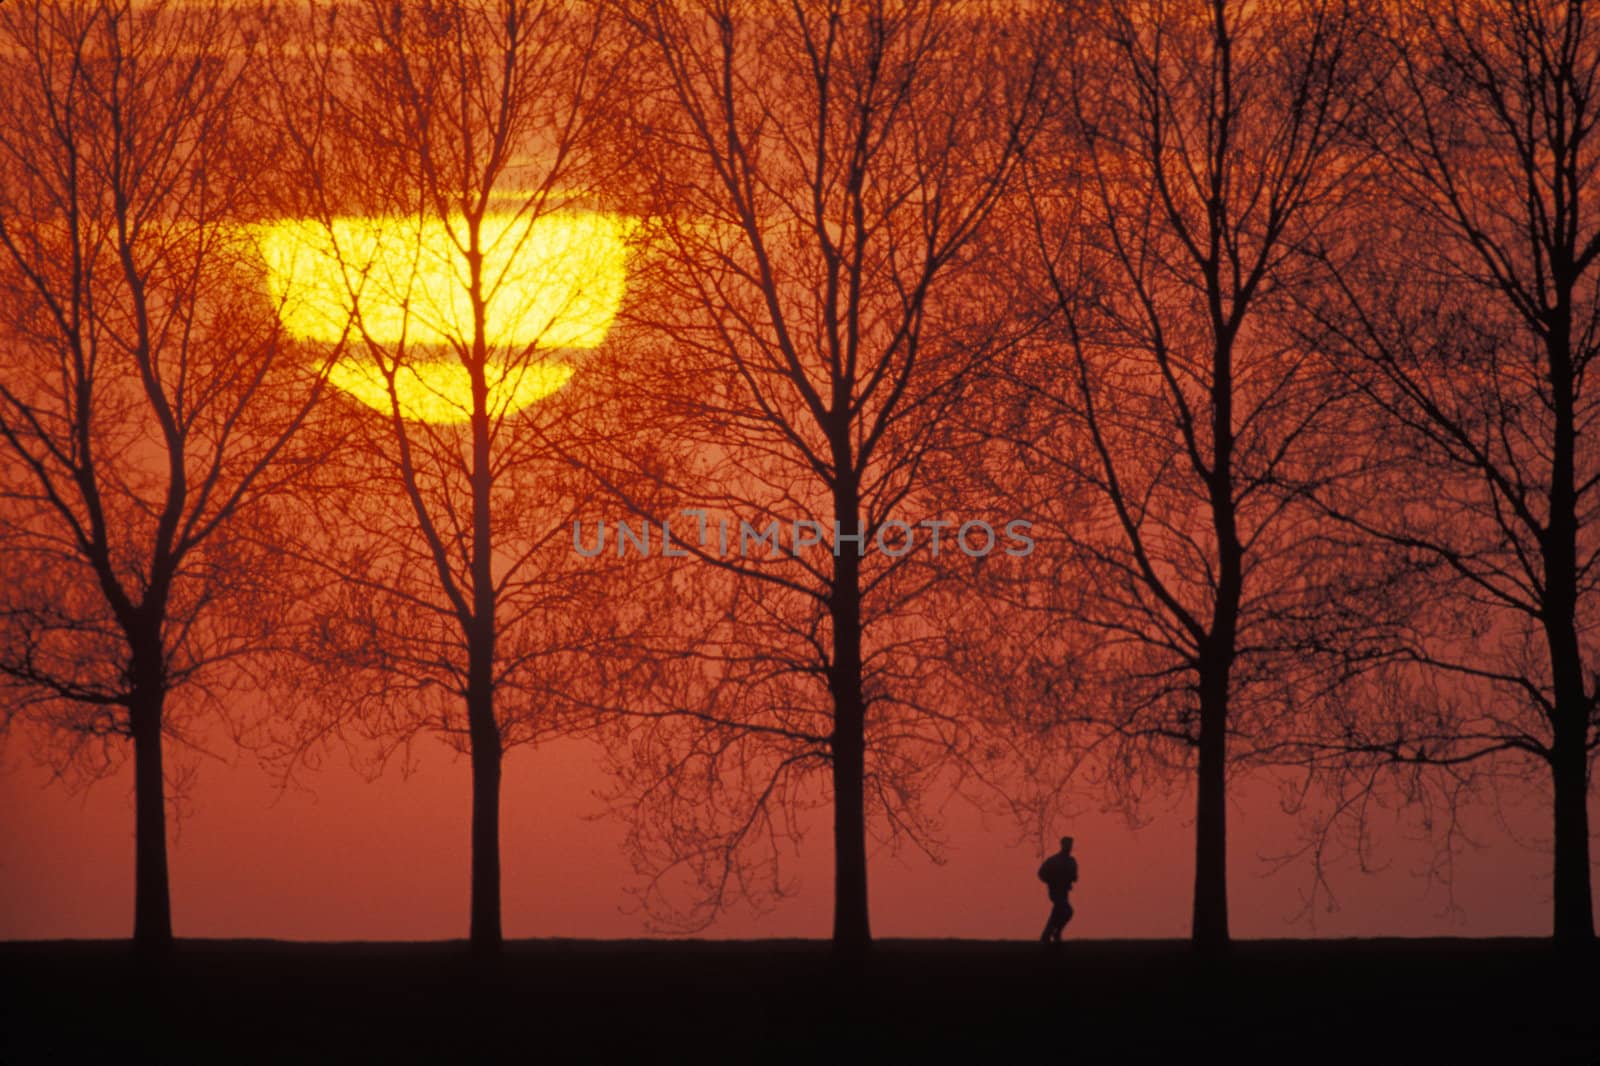 Human figure running under trees at sunset